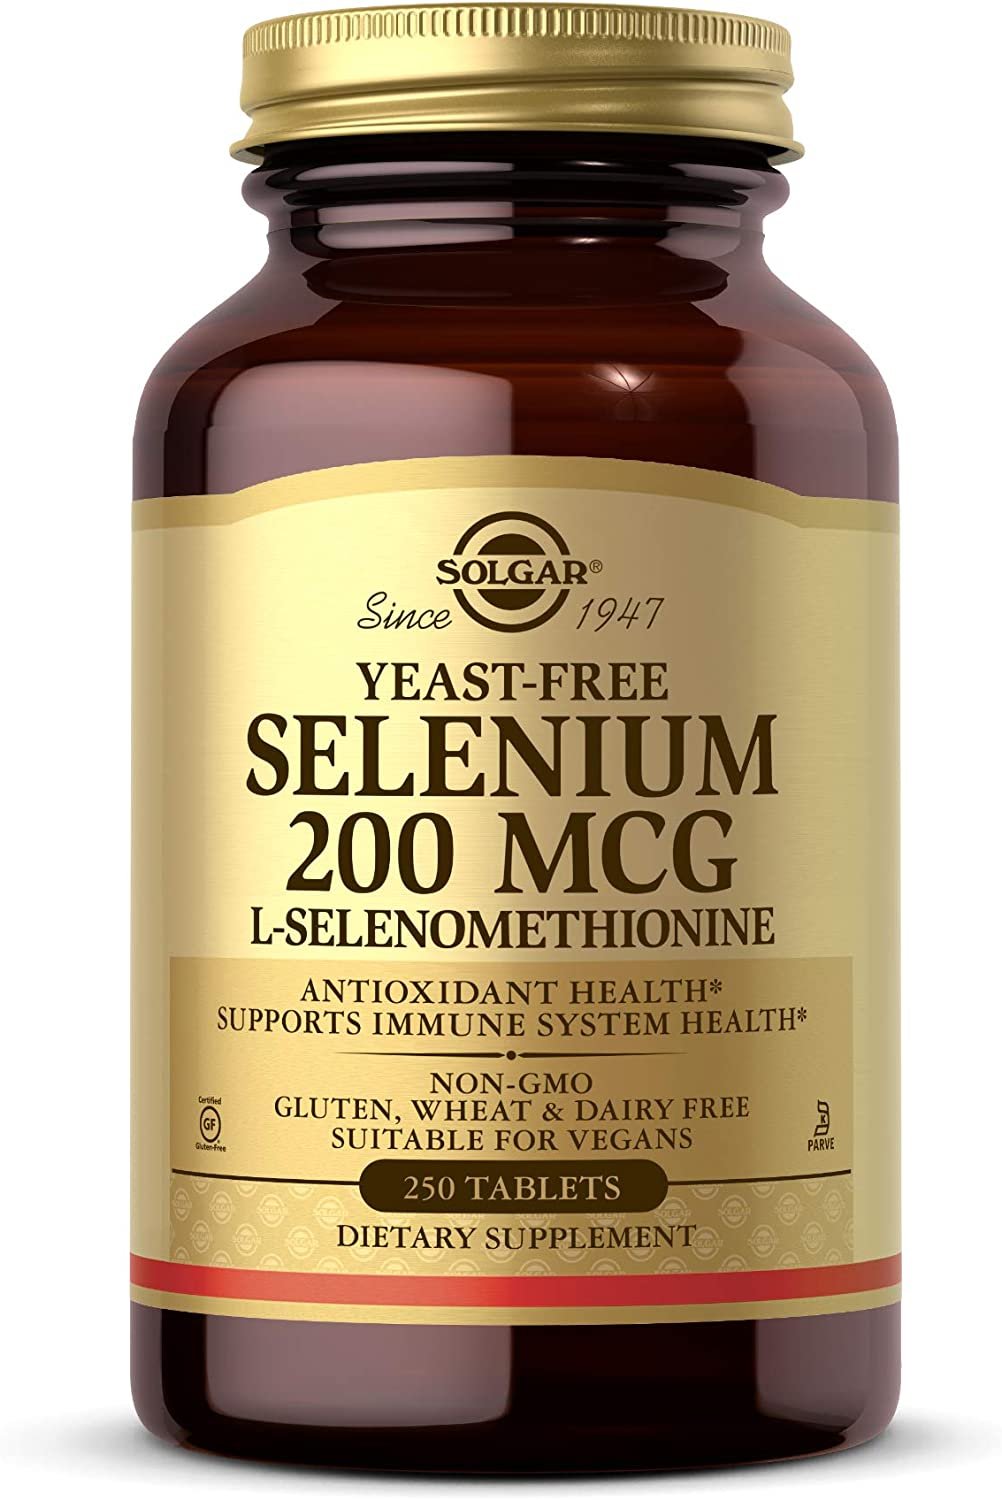 Solgar Yeast-Free Selenium 200 mcg, 250 Tablets - Supports Antioxidant & Immune System Health - Non-GMO, Vegan, Gluten Free, Dairy Free, Kosher - 250 Servings